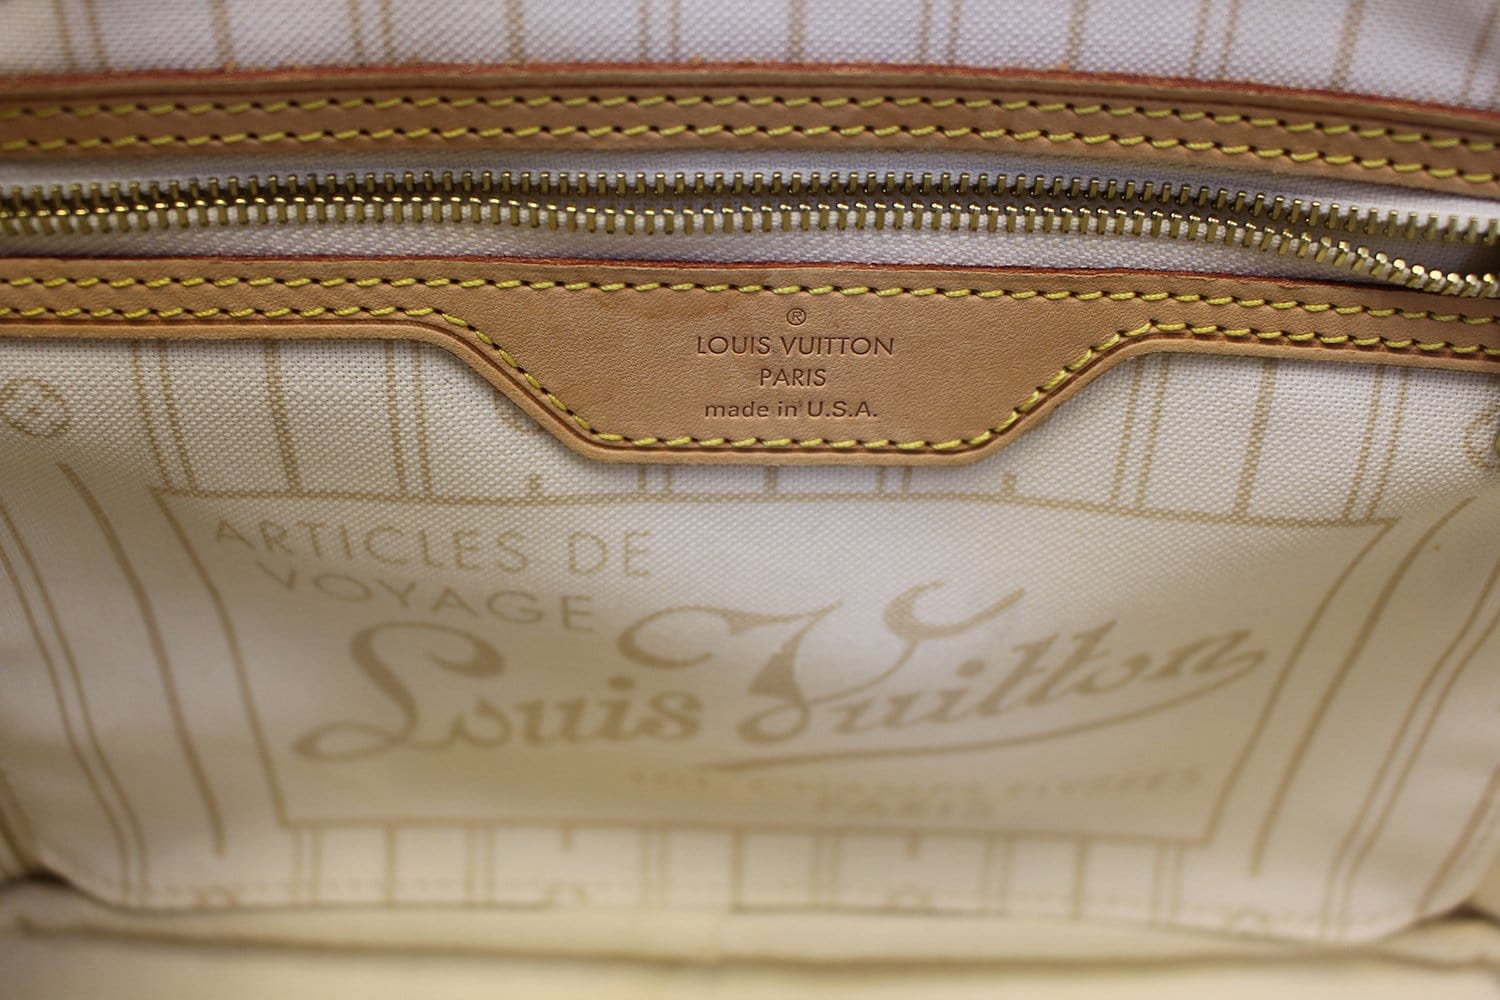 White Louis Vuitton Damier Azur Neverfull PM Tote Bag